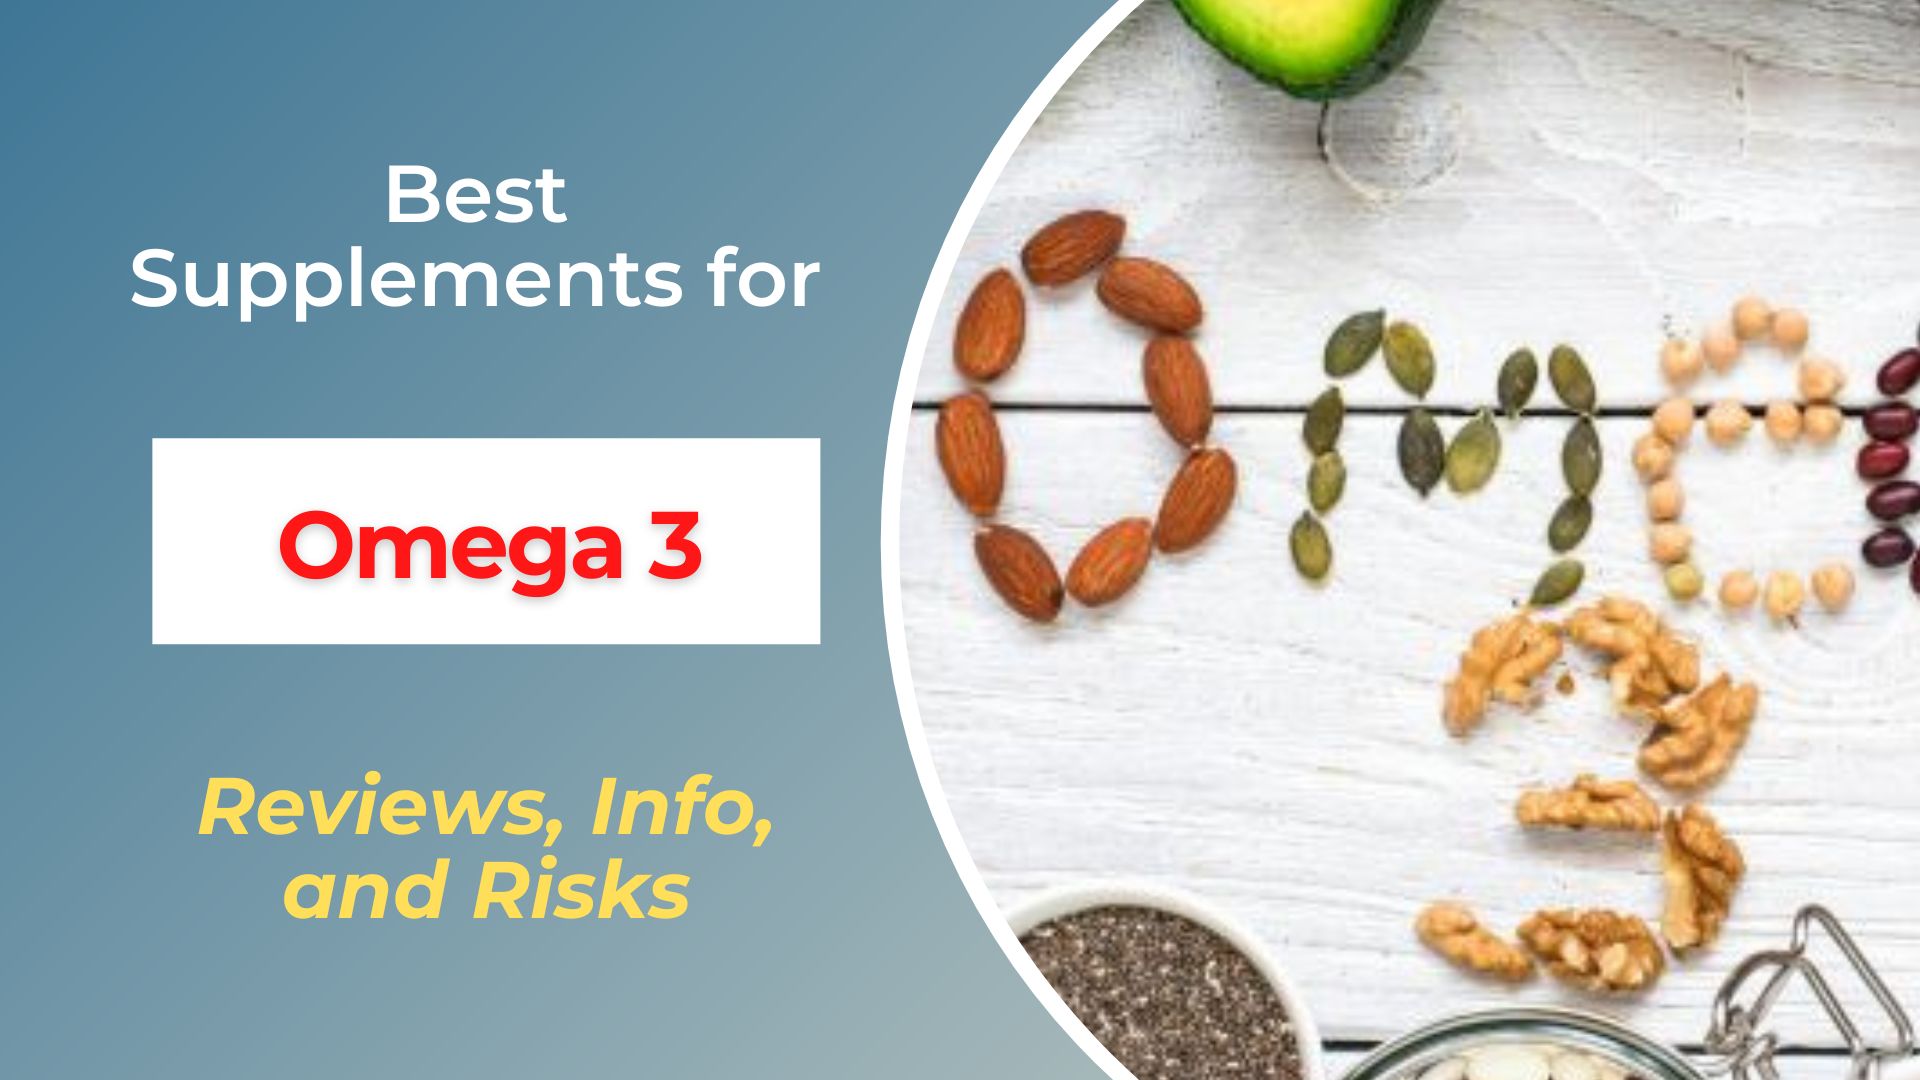 Best Supplements for Omega 3